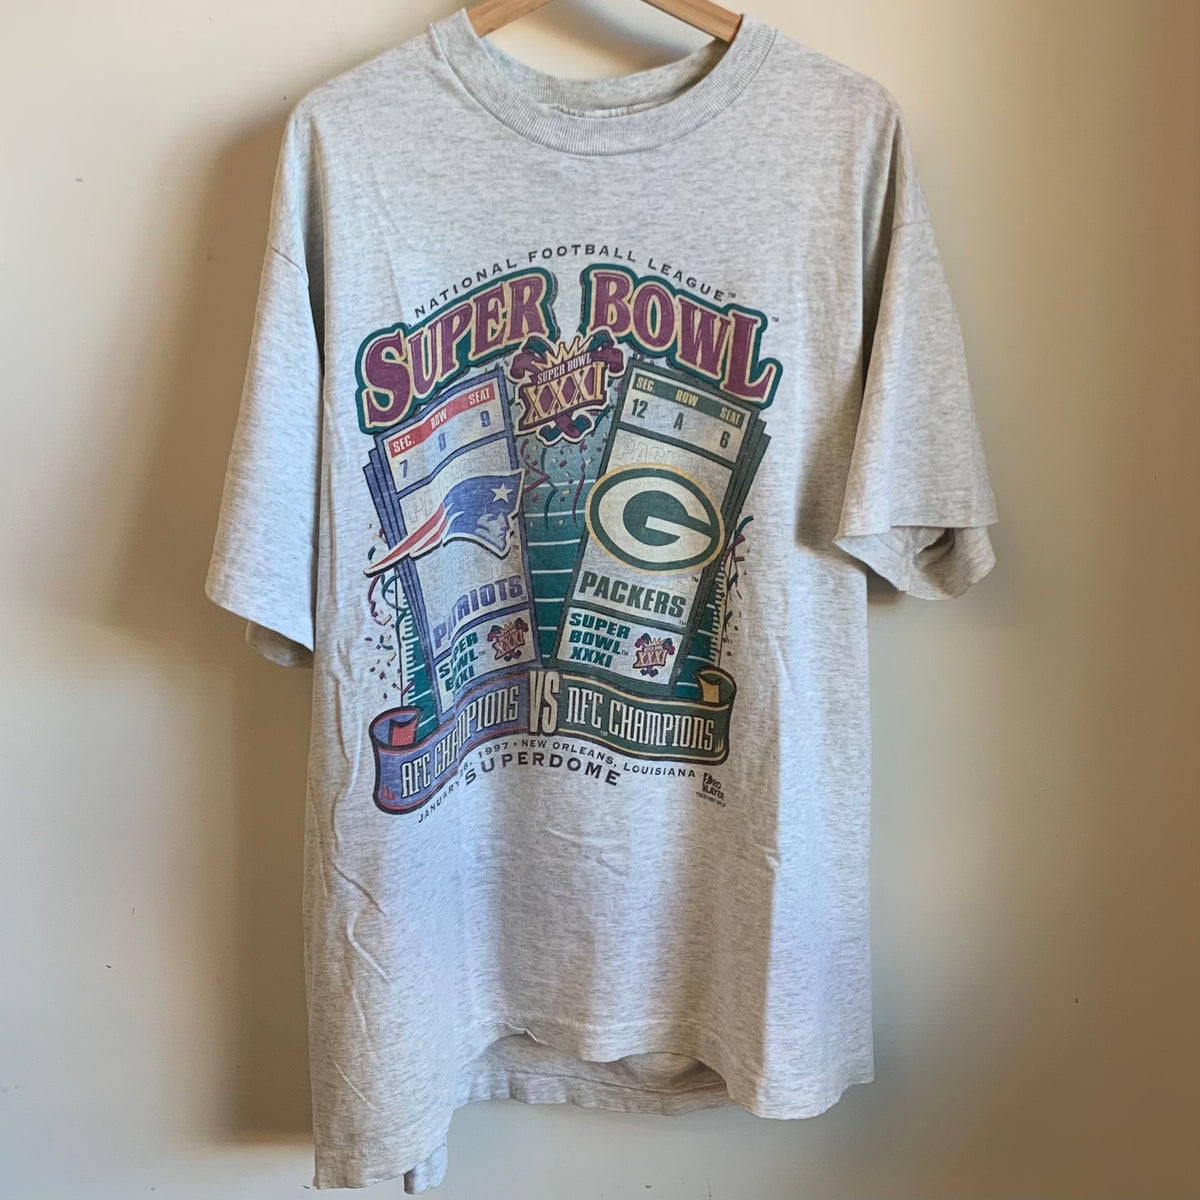 Pro Player, Shirts, 997 Super Bowl T Shirt